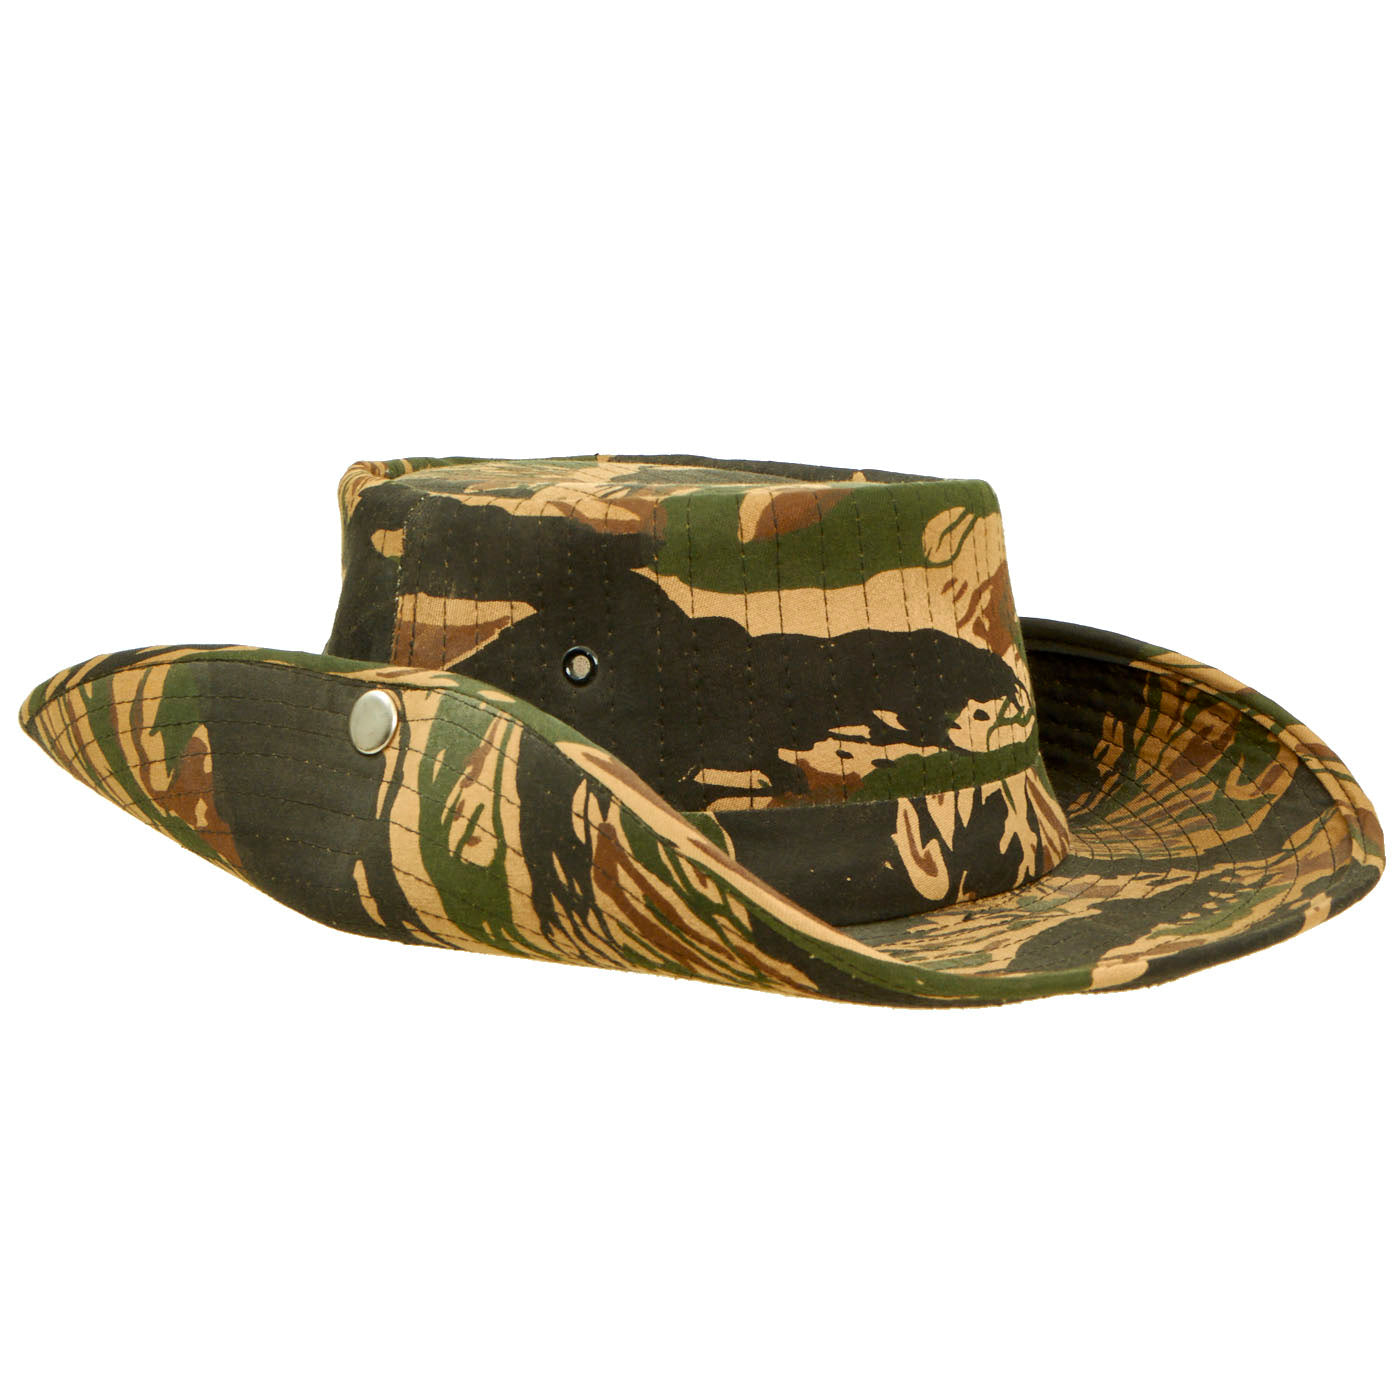 Original U.S. Vietnam War Incountry-Made Tigerstripe “Cowboy” Bush Hat